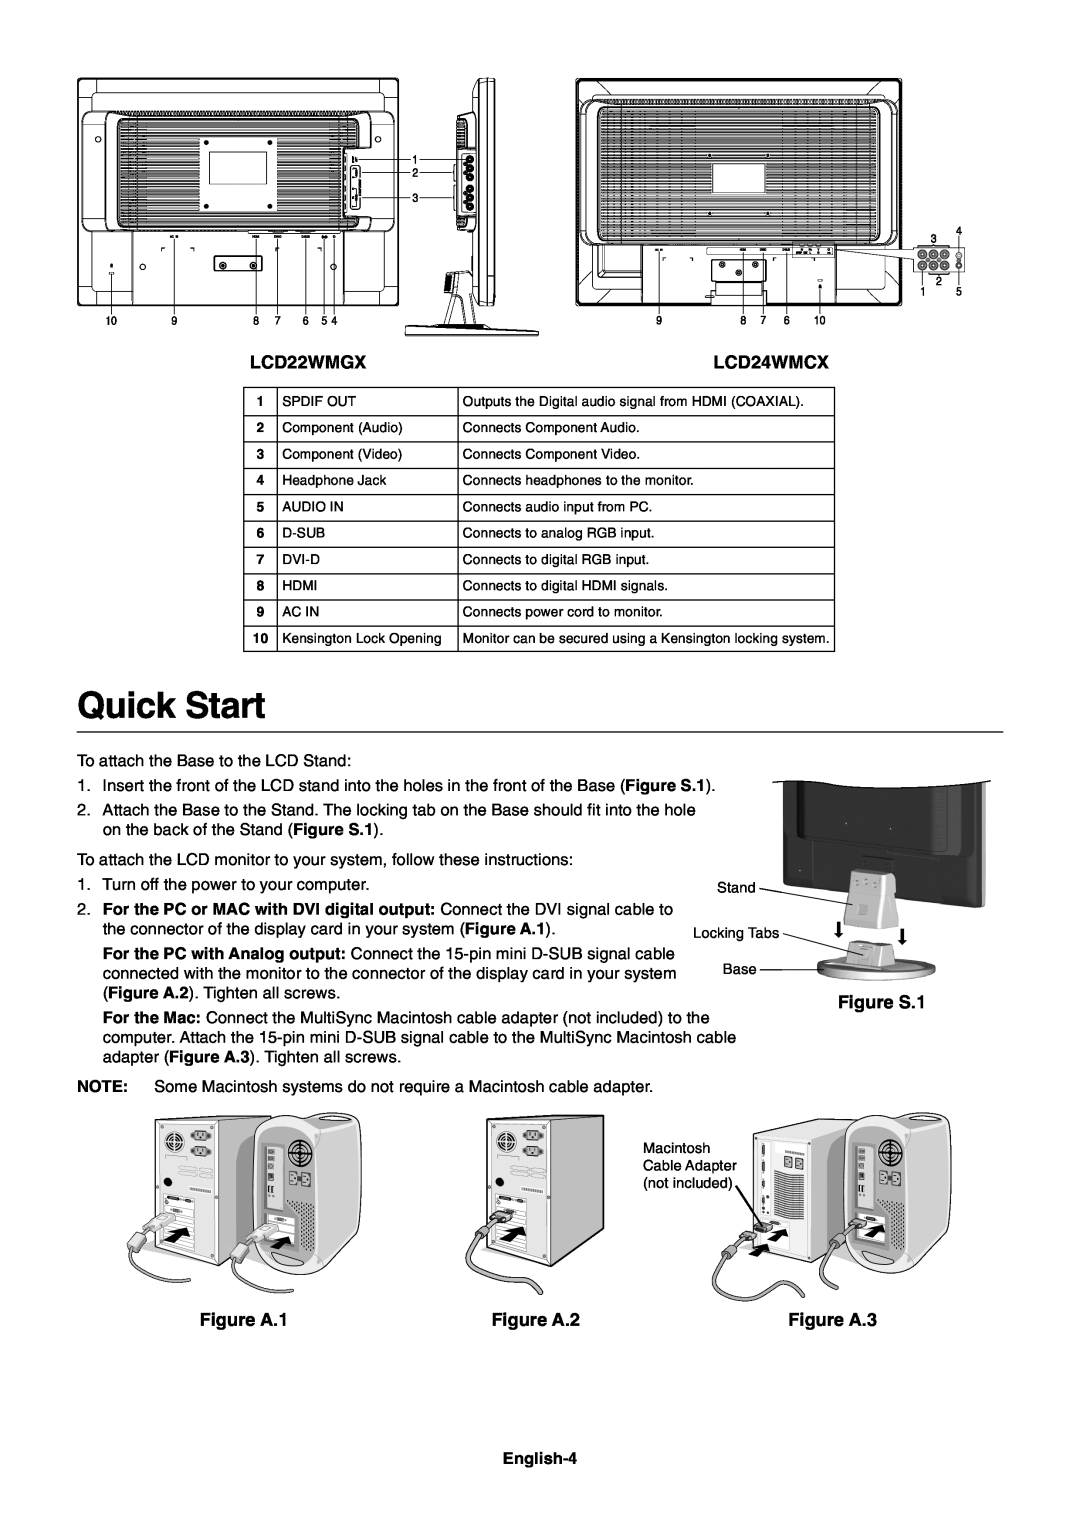 NEC LCD22WMGX user manual Quick Start, LCD24WMCX, Figure S.1, Figure A.1, Figure A.2, Figure A.3 